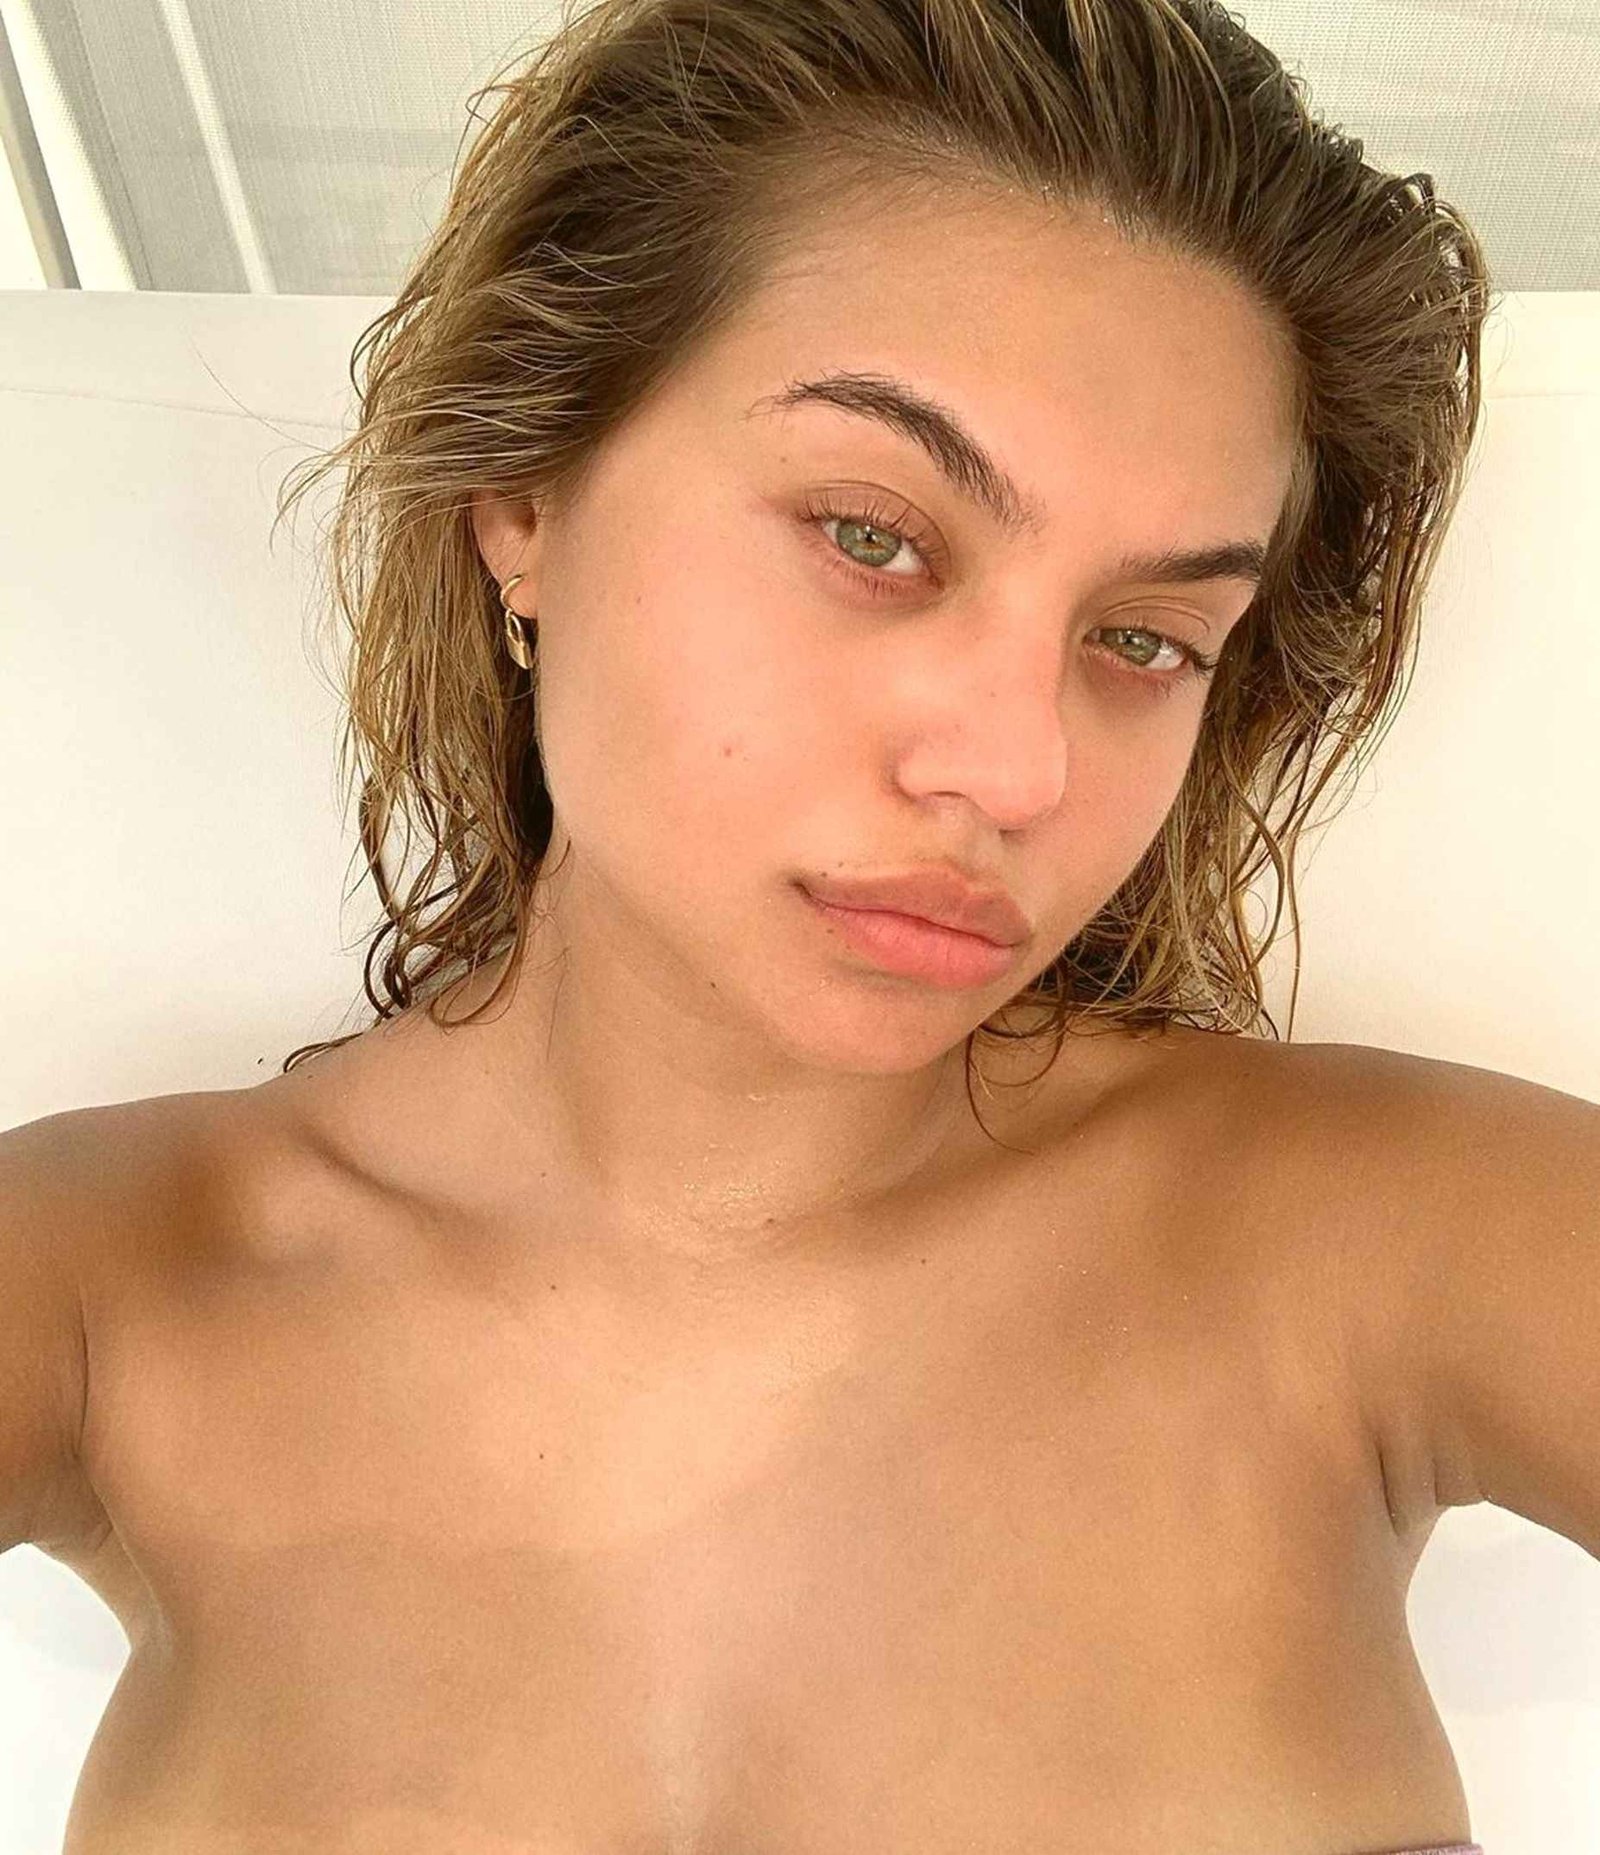 Sofia Jamora seins nus sur Instagram